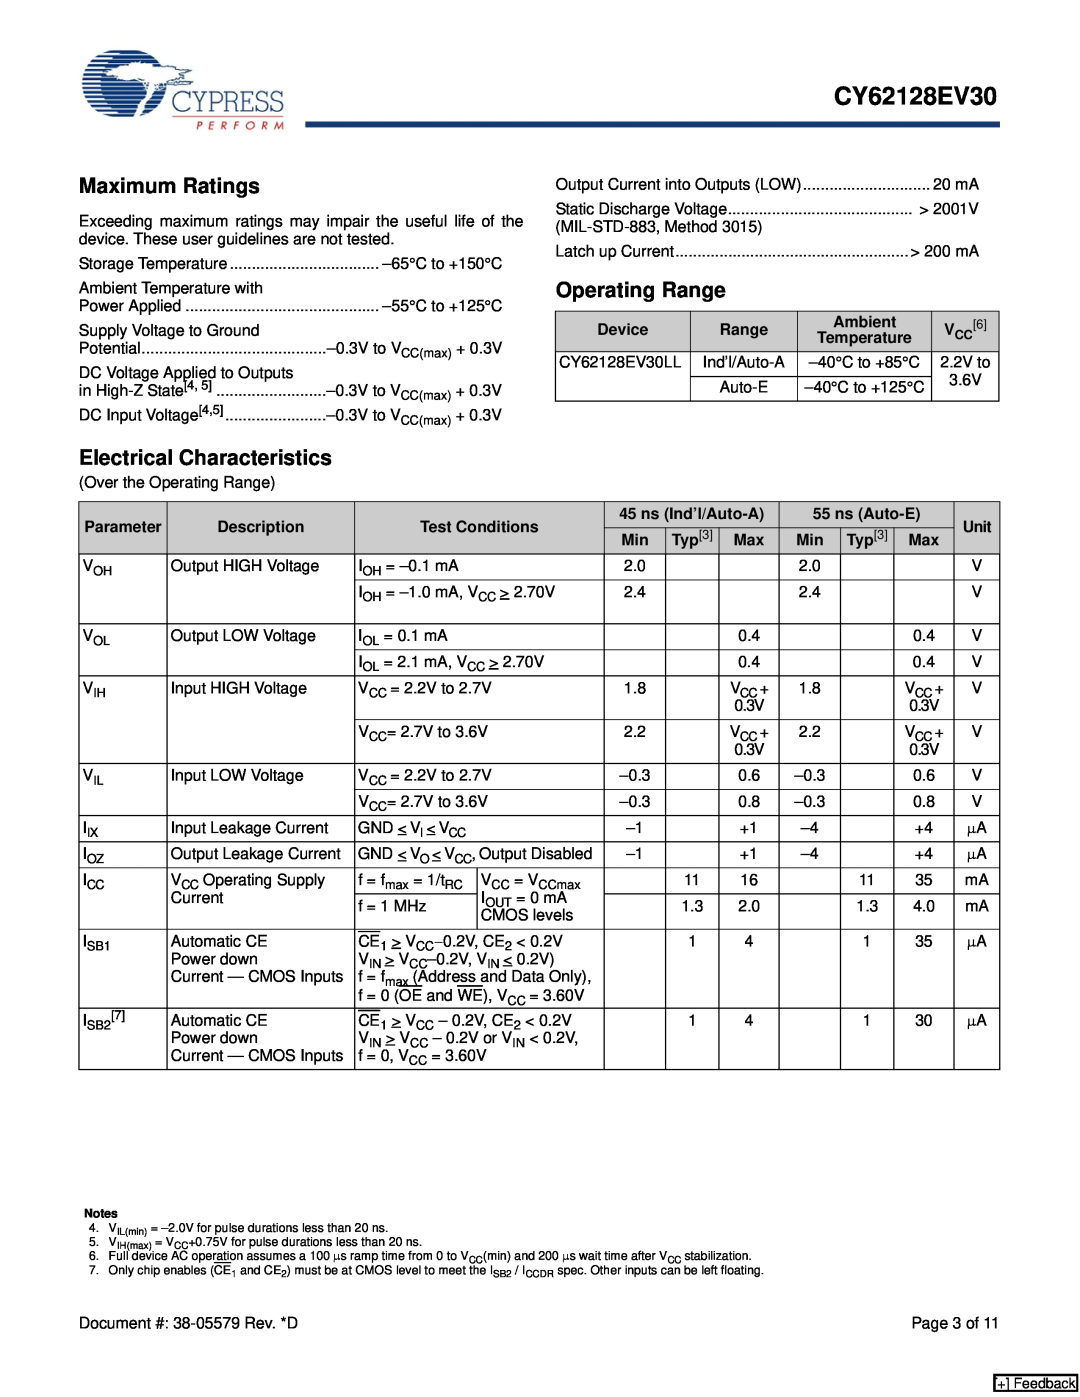 Cypress CY62128EV30 manual Maximum Ratings, Operating Range, Electrical Characteristics 